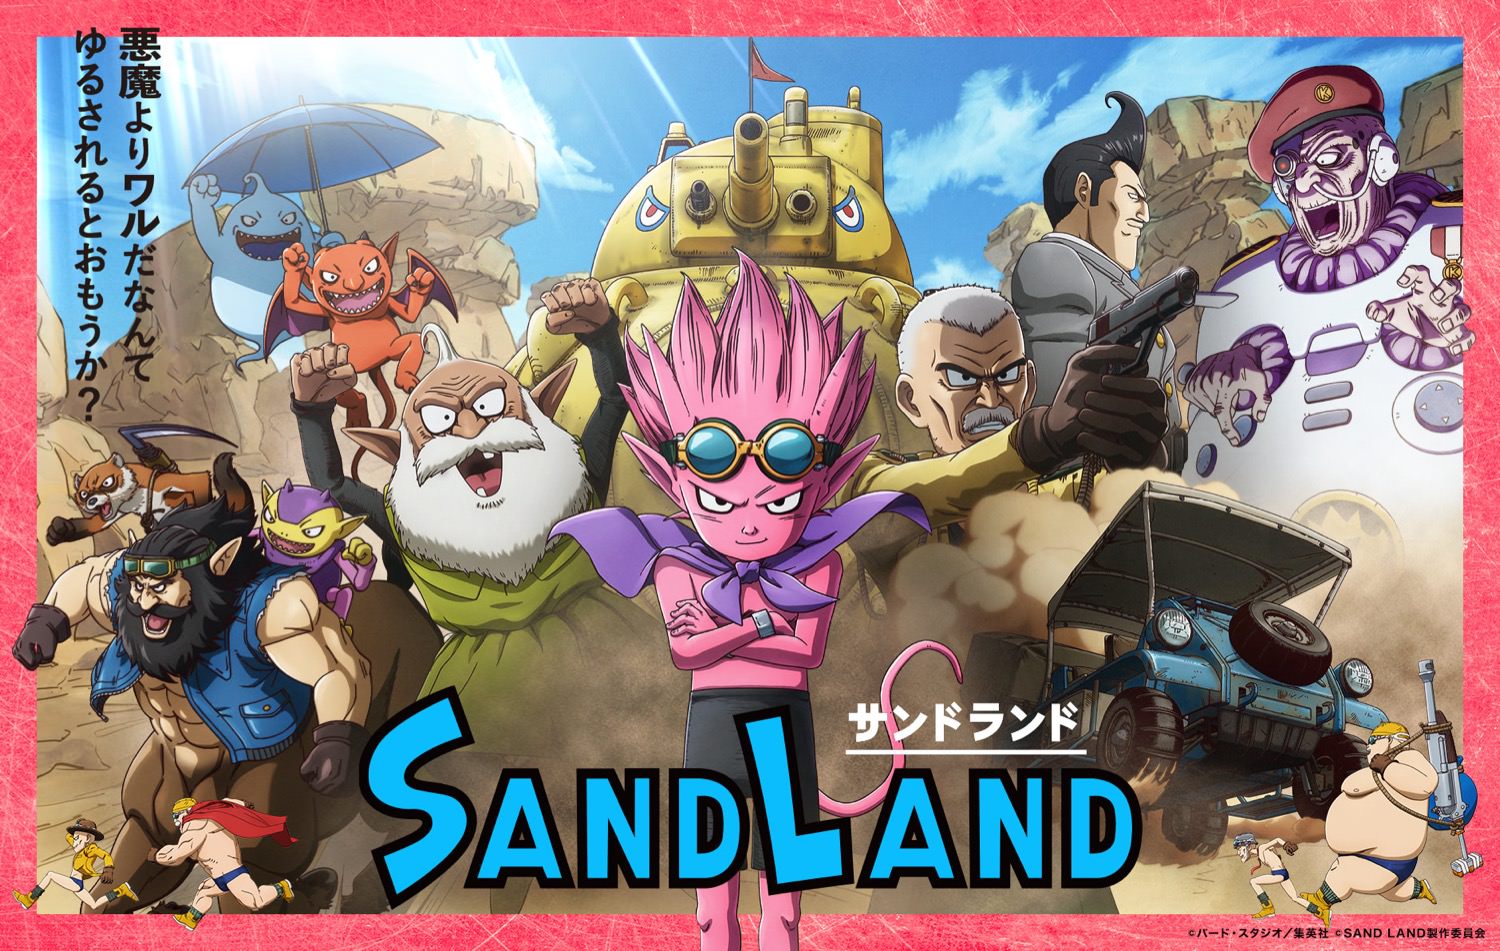 SAND LAND 特別展示 in MIYASHITA PARK渋谷 8月14日より実施!